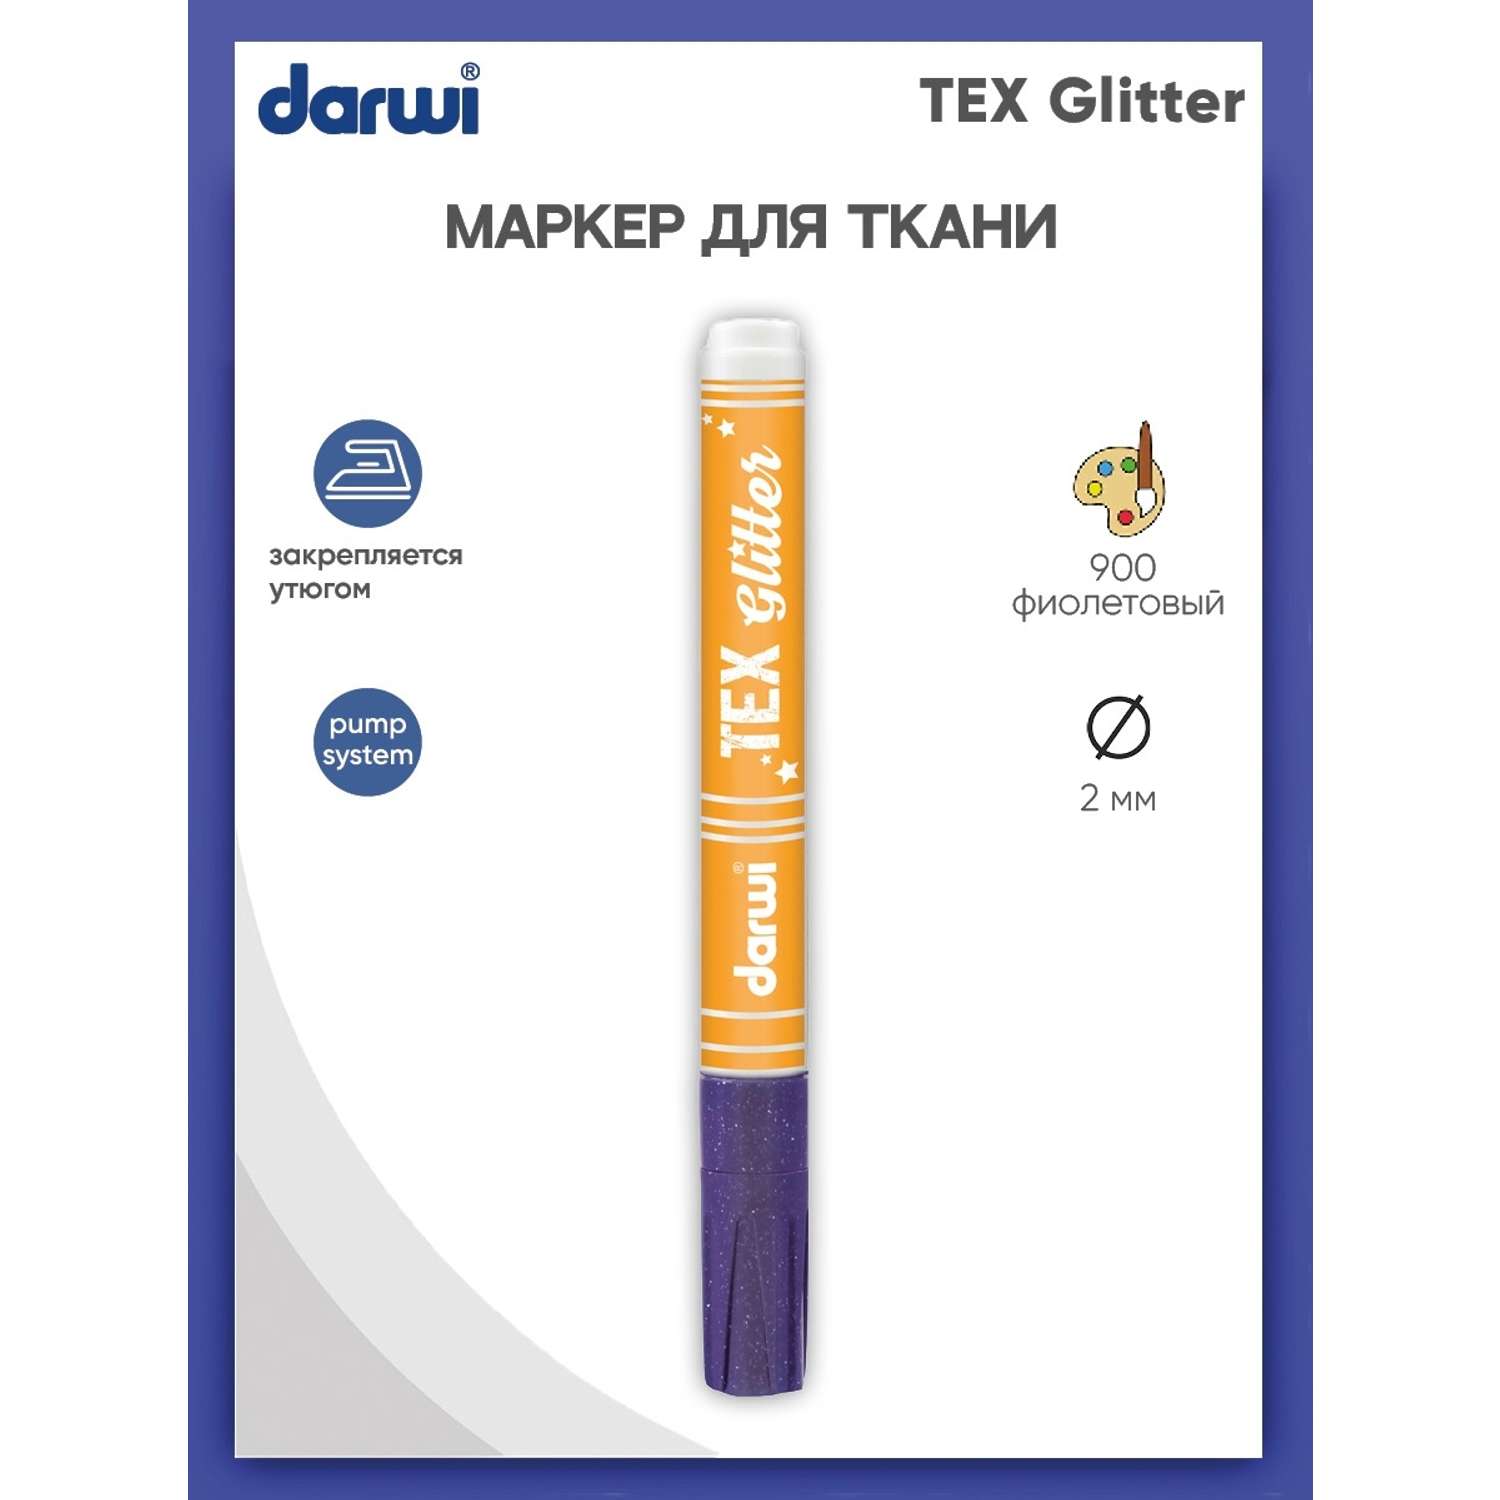 Маркер Darwi для ткани TEX Glitter DA0140013 2 мм с блестками 900 фиолетовый - фото 1